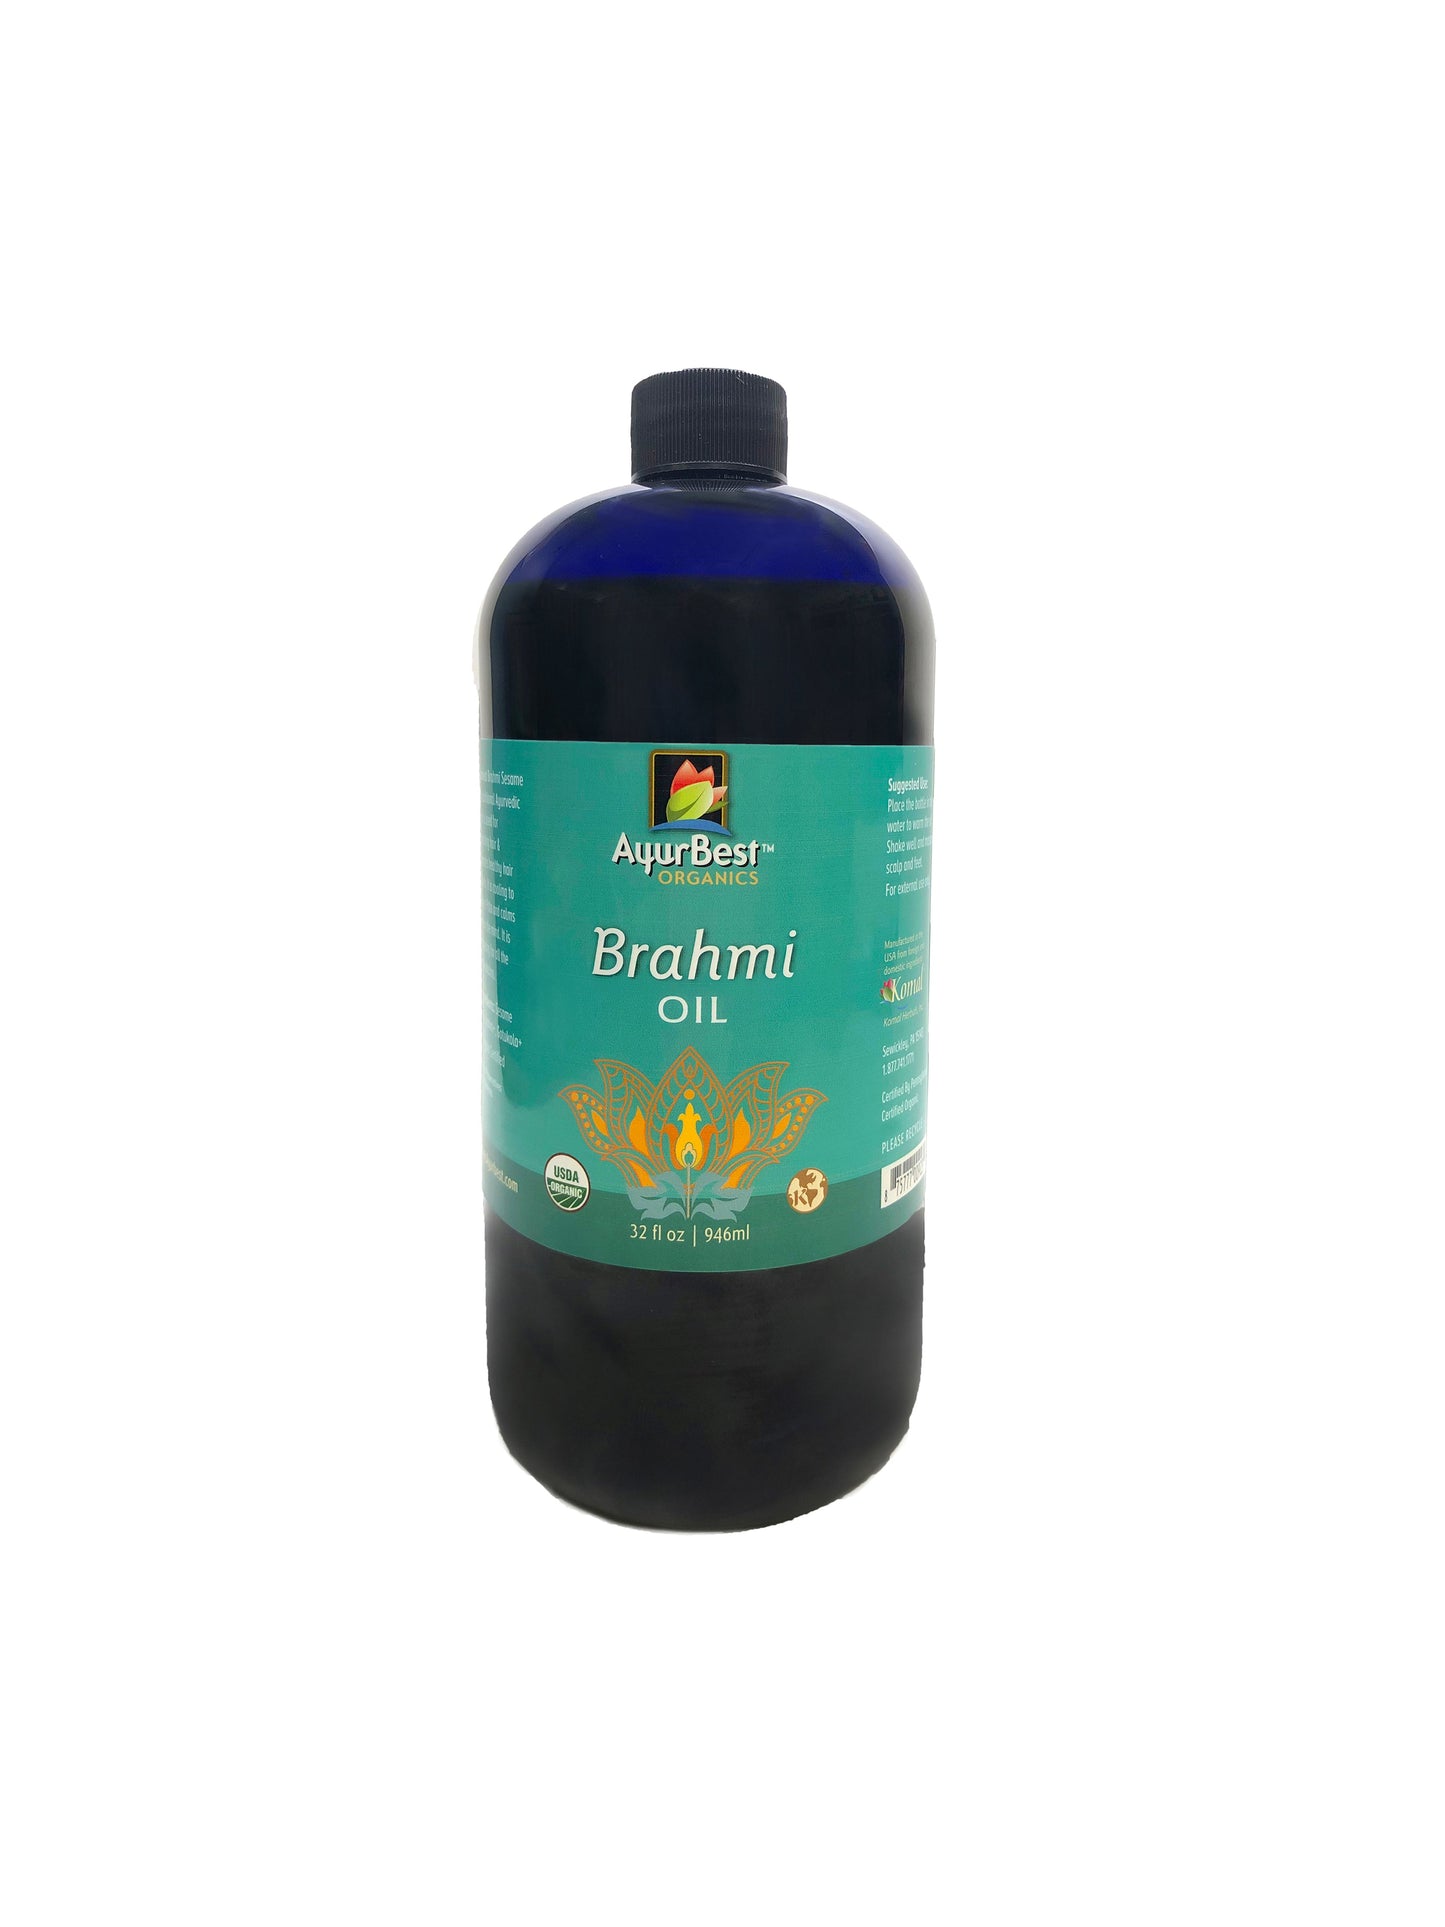 Wholesale Oils - Brahmi Oil, Organic